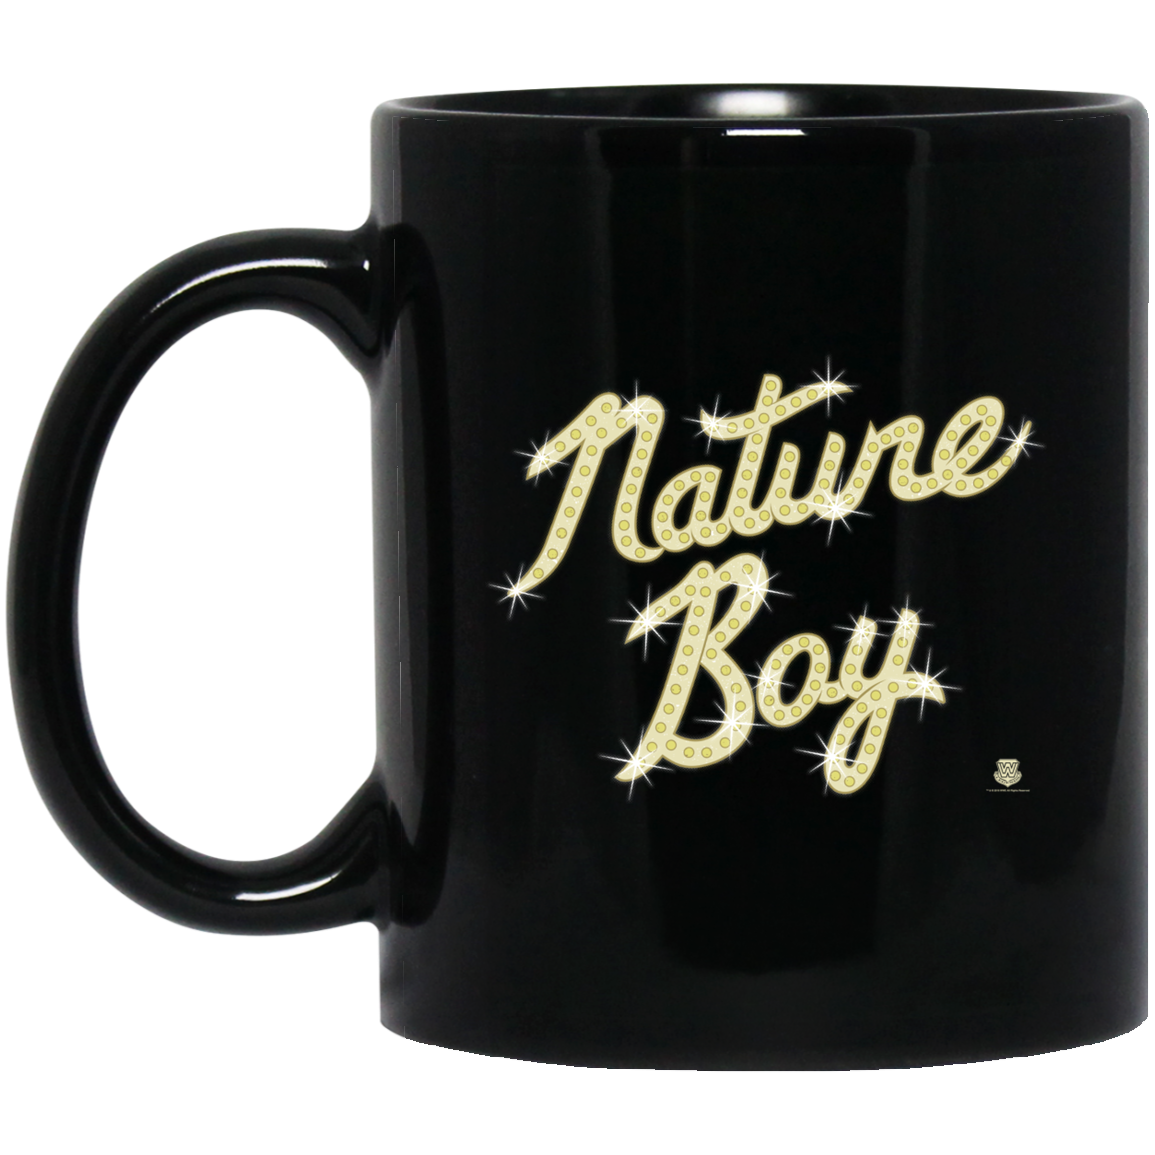 Nature Boy Bling Mug